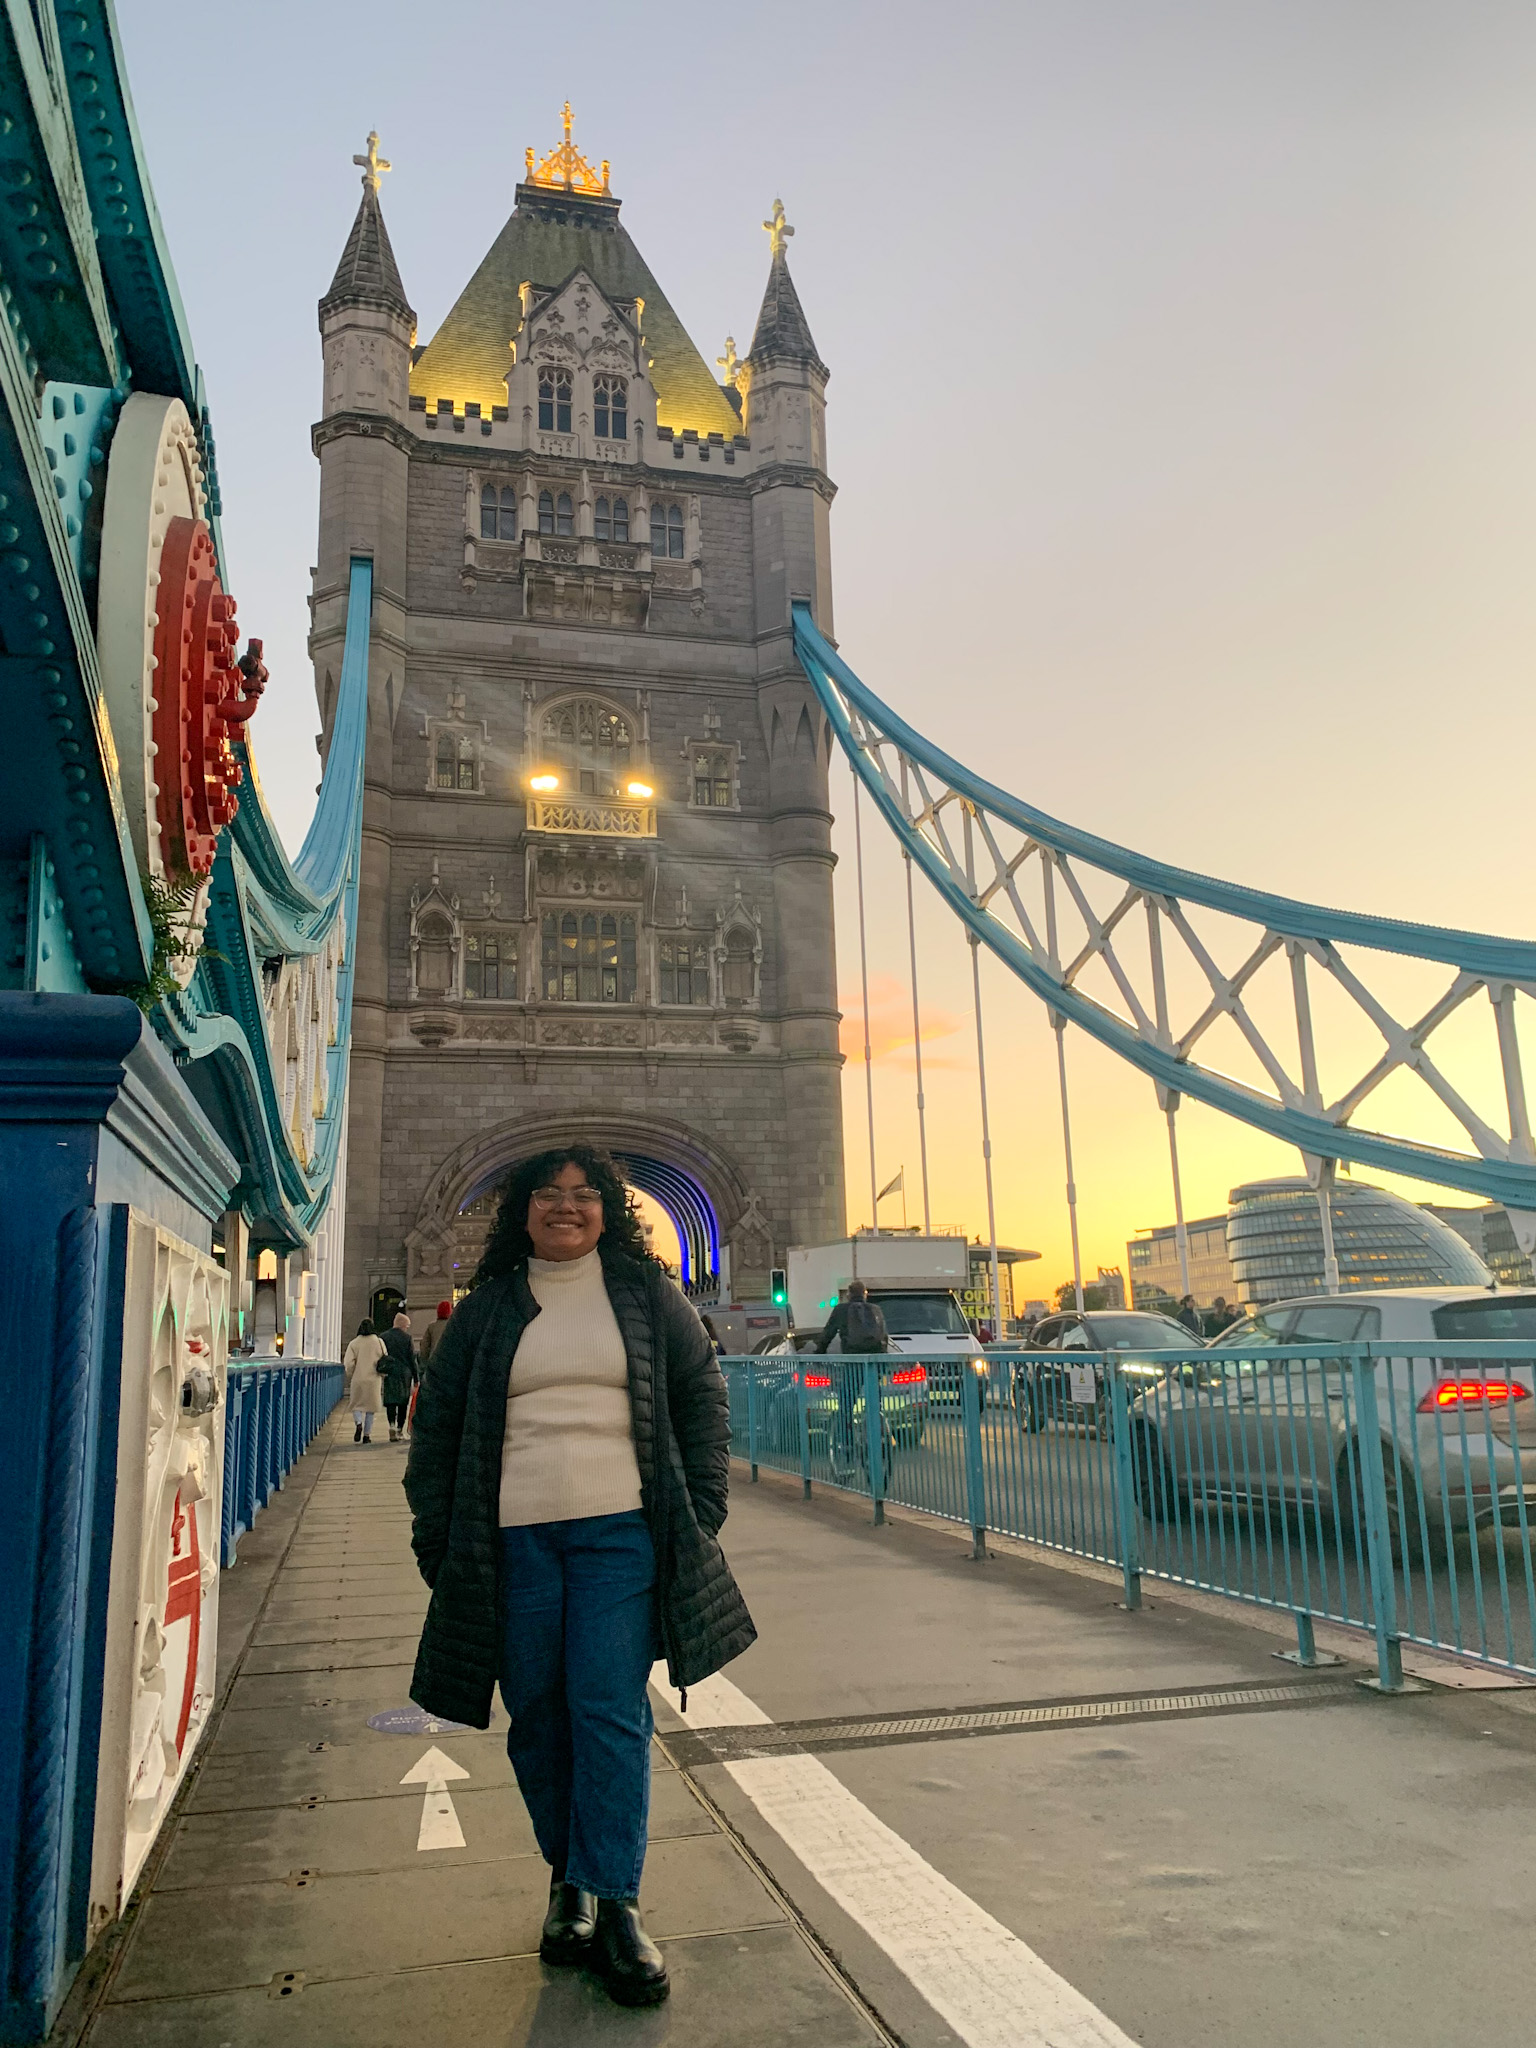 Tower bridge - London, UK - October 2021